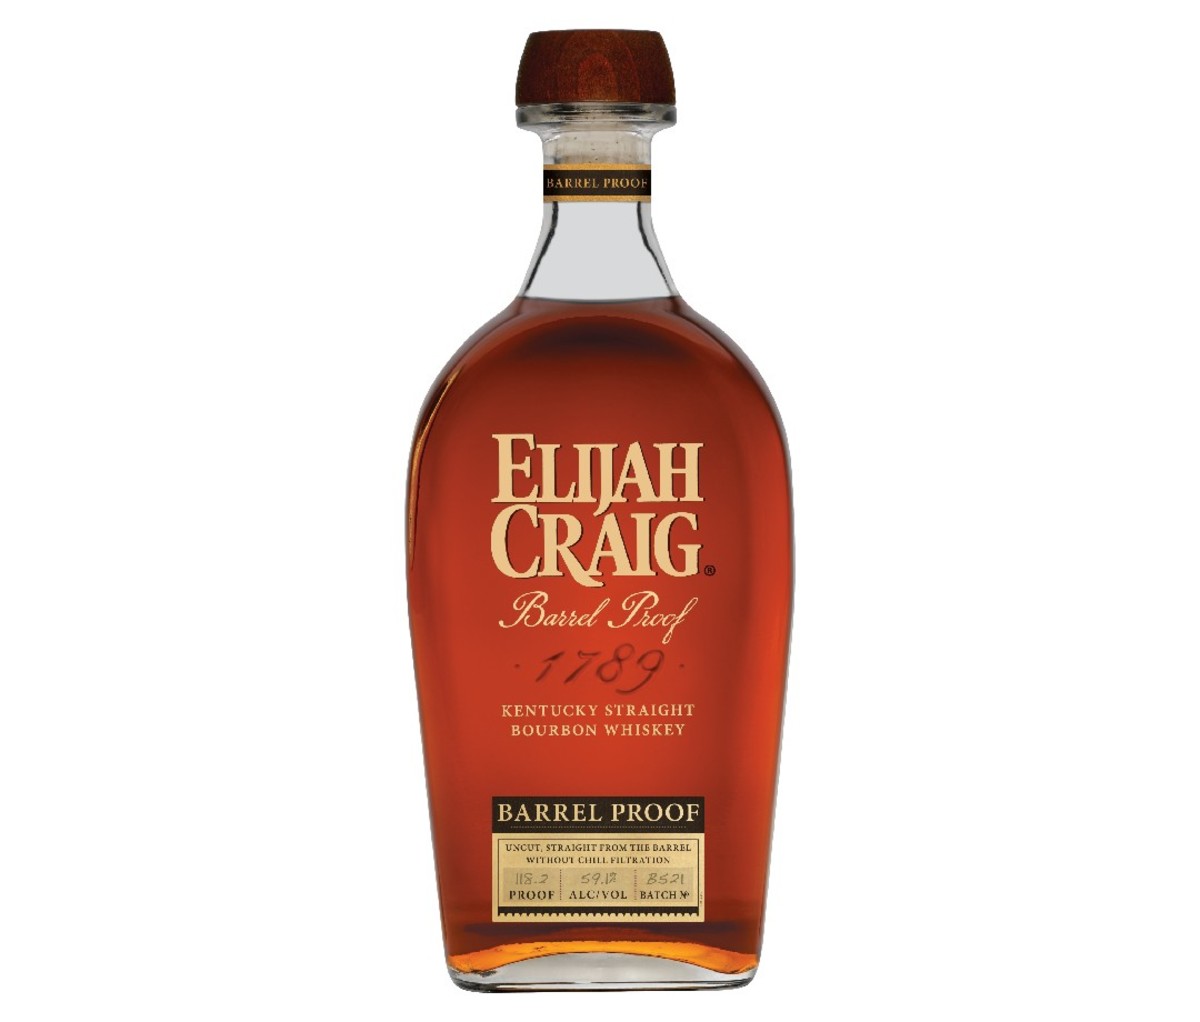 A bottle of Elijah Craig Barrel Proof bourbon.